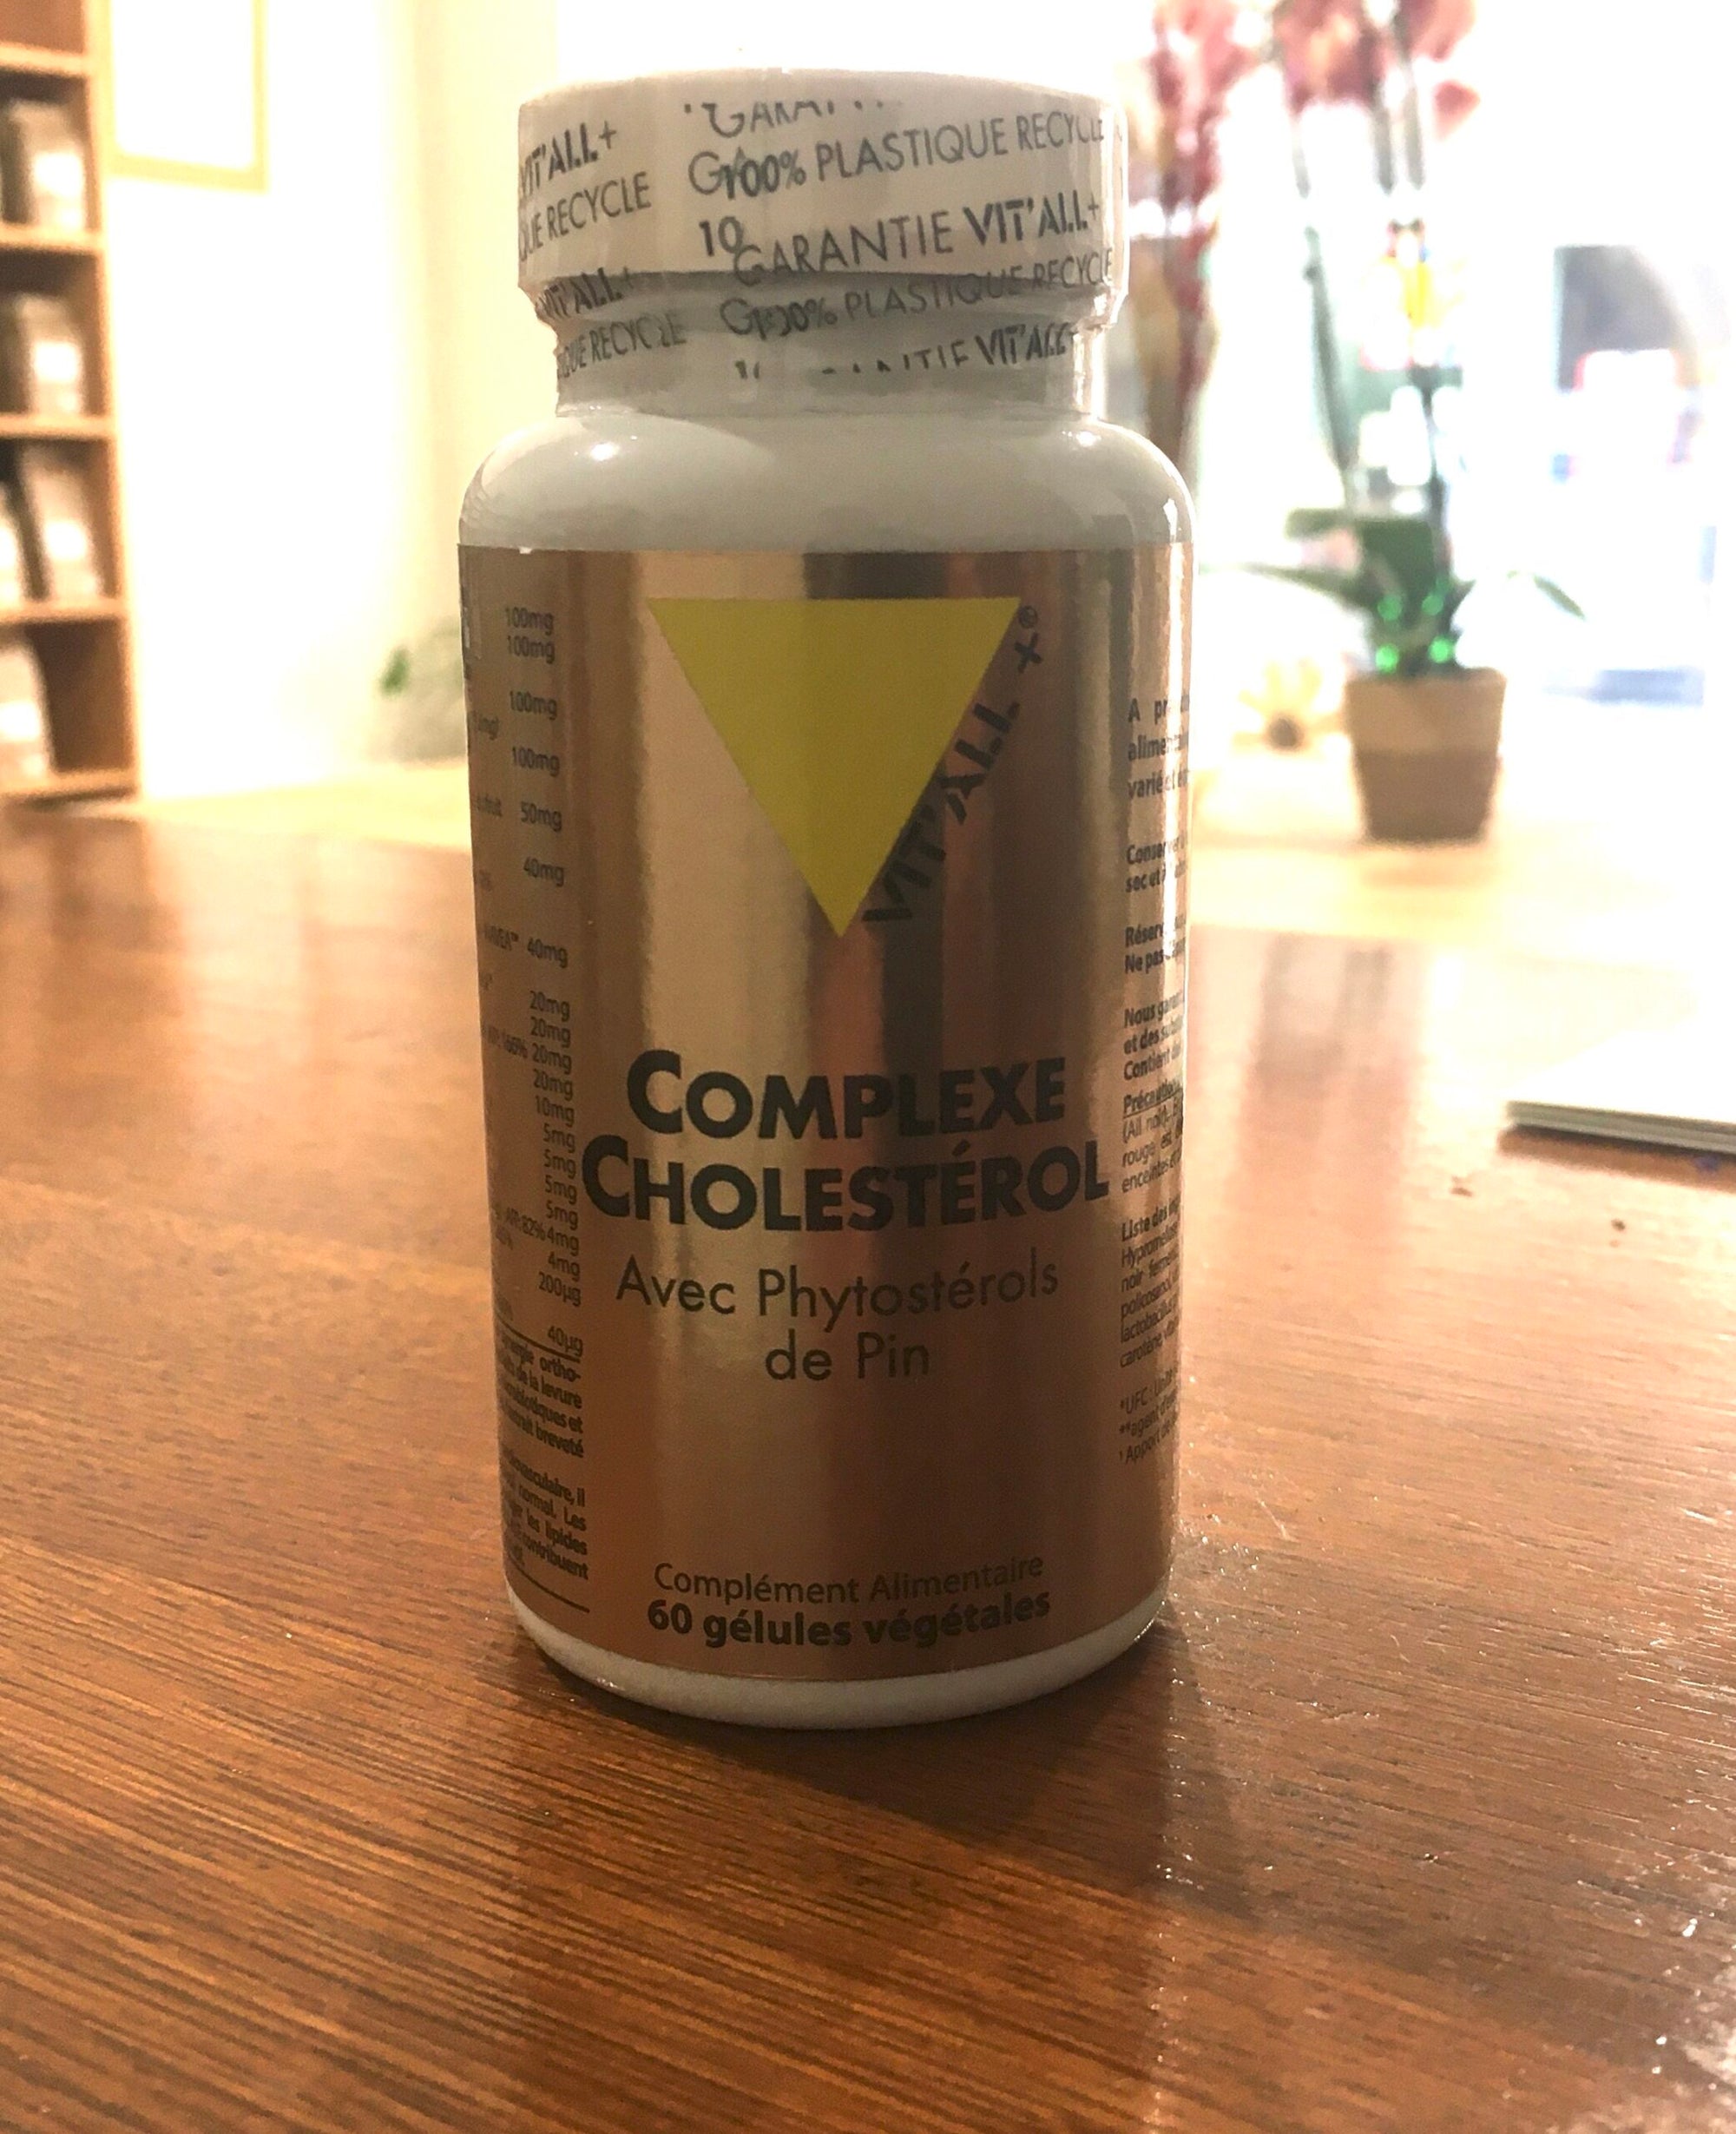 Complexe Cholestérol